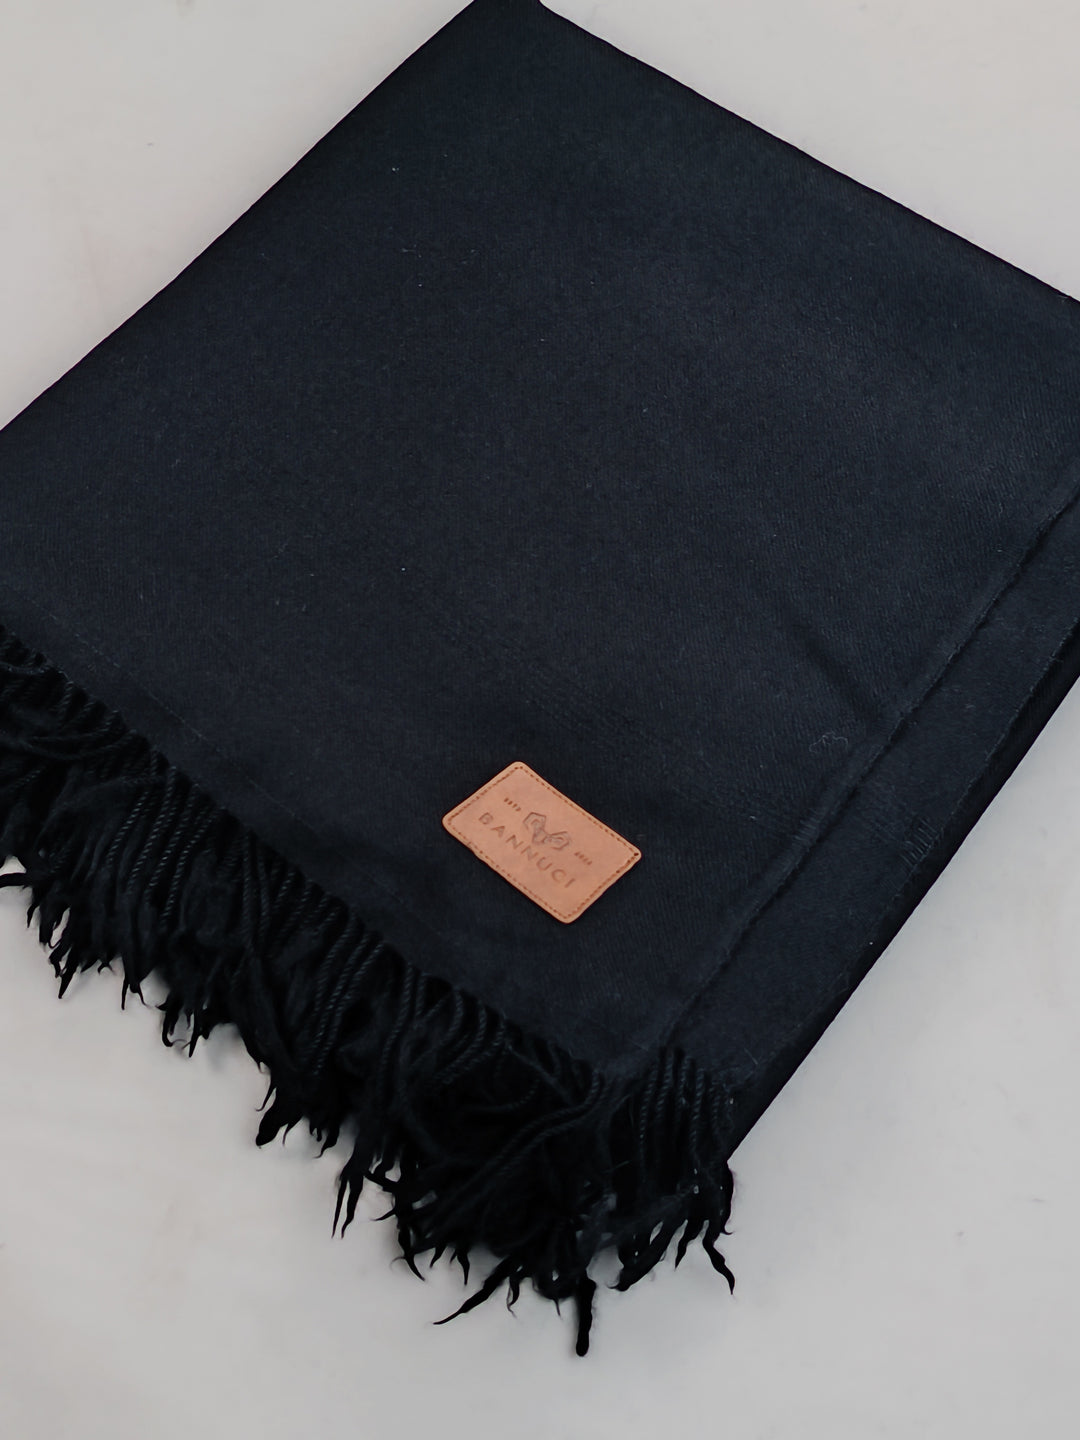 Premium Quality Plain Black Pure Woolen Shawl